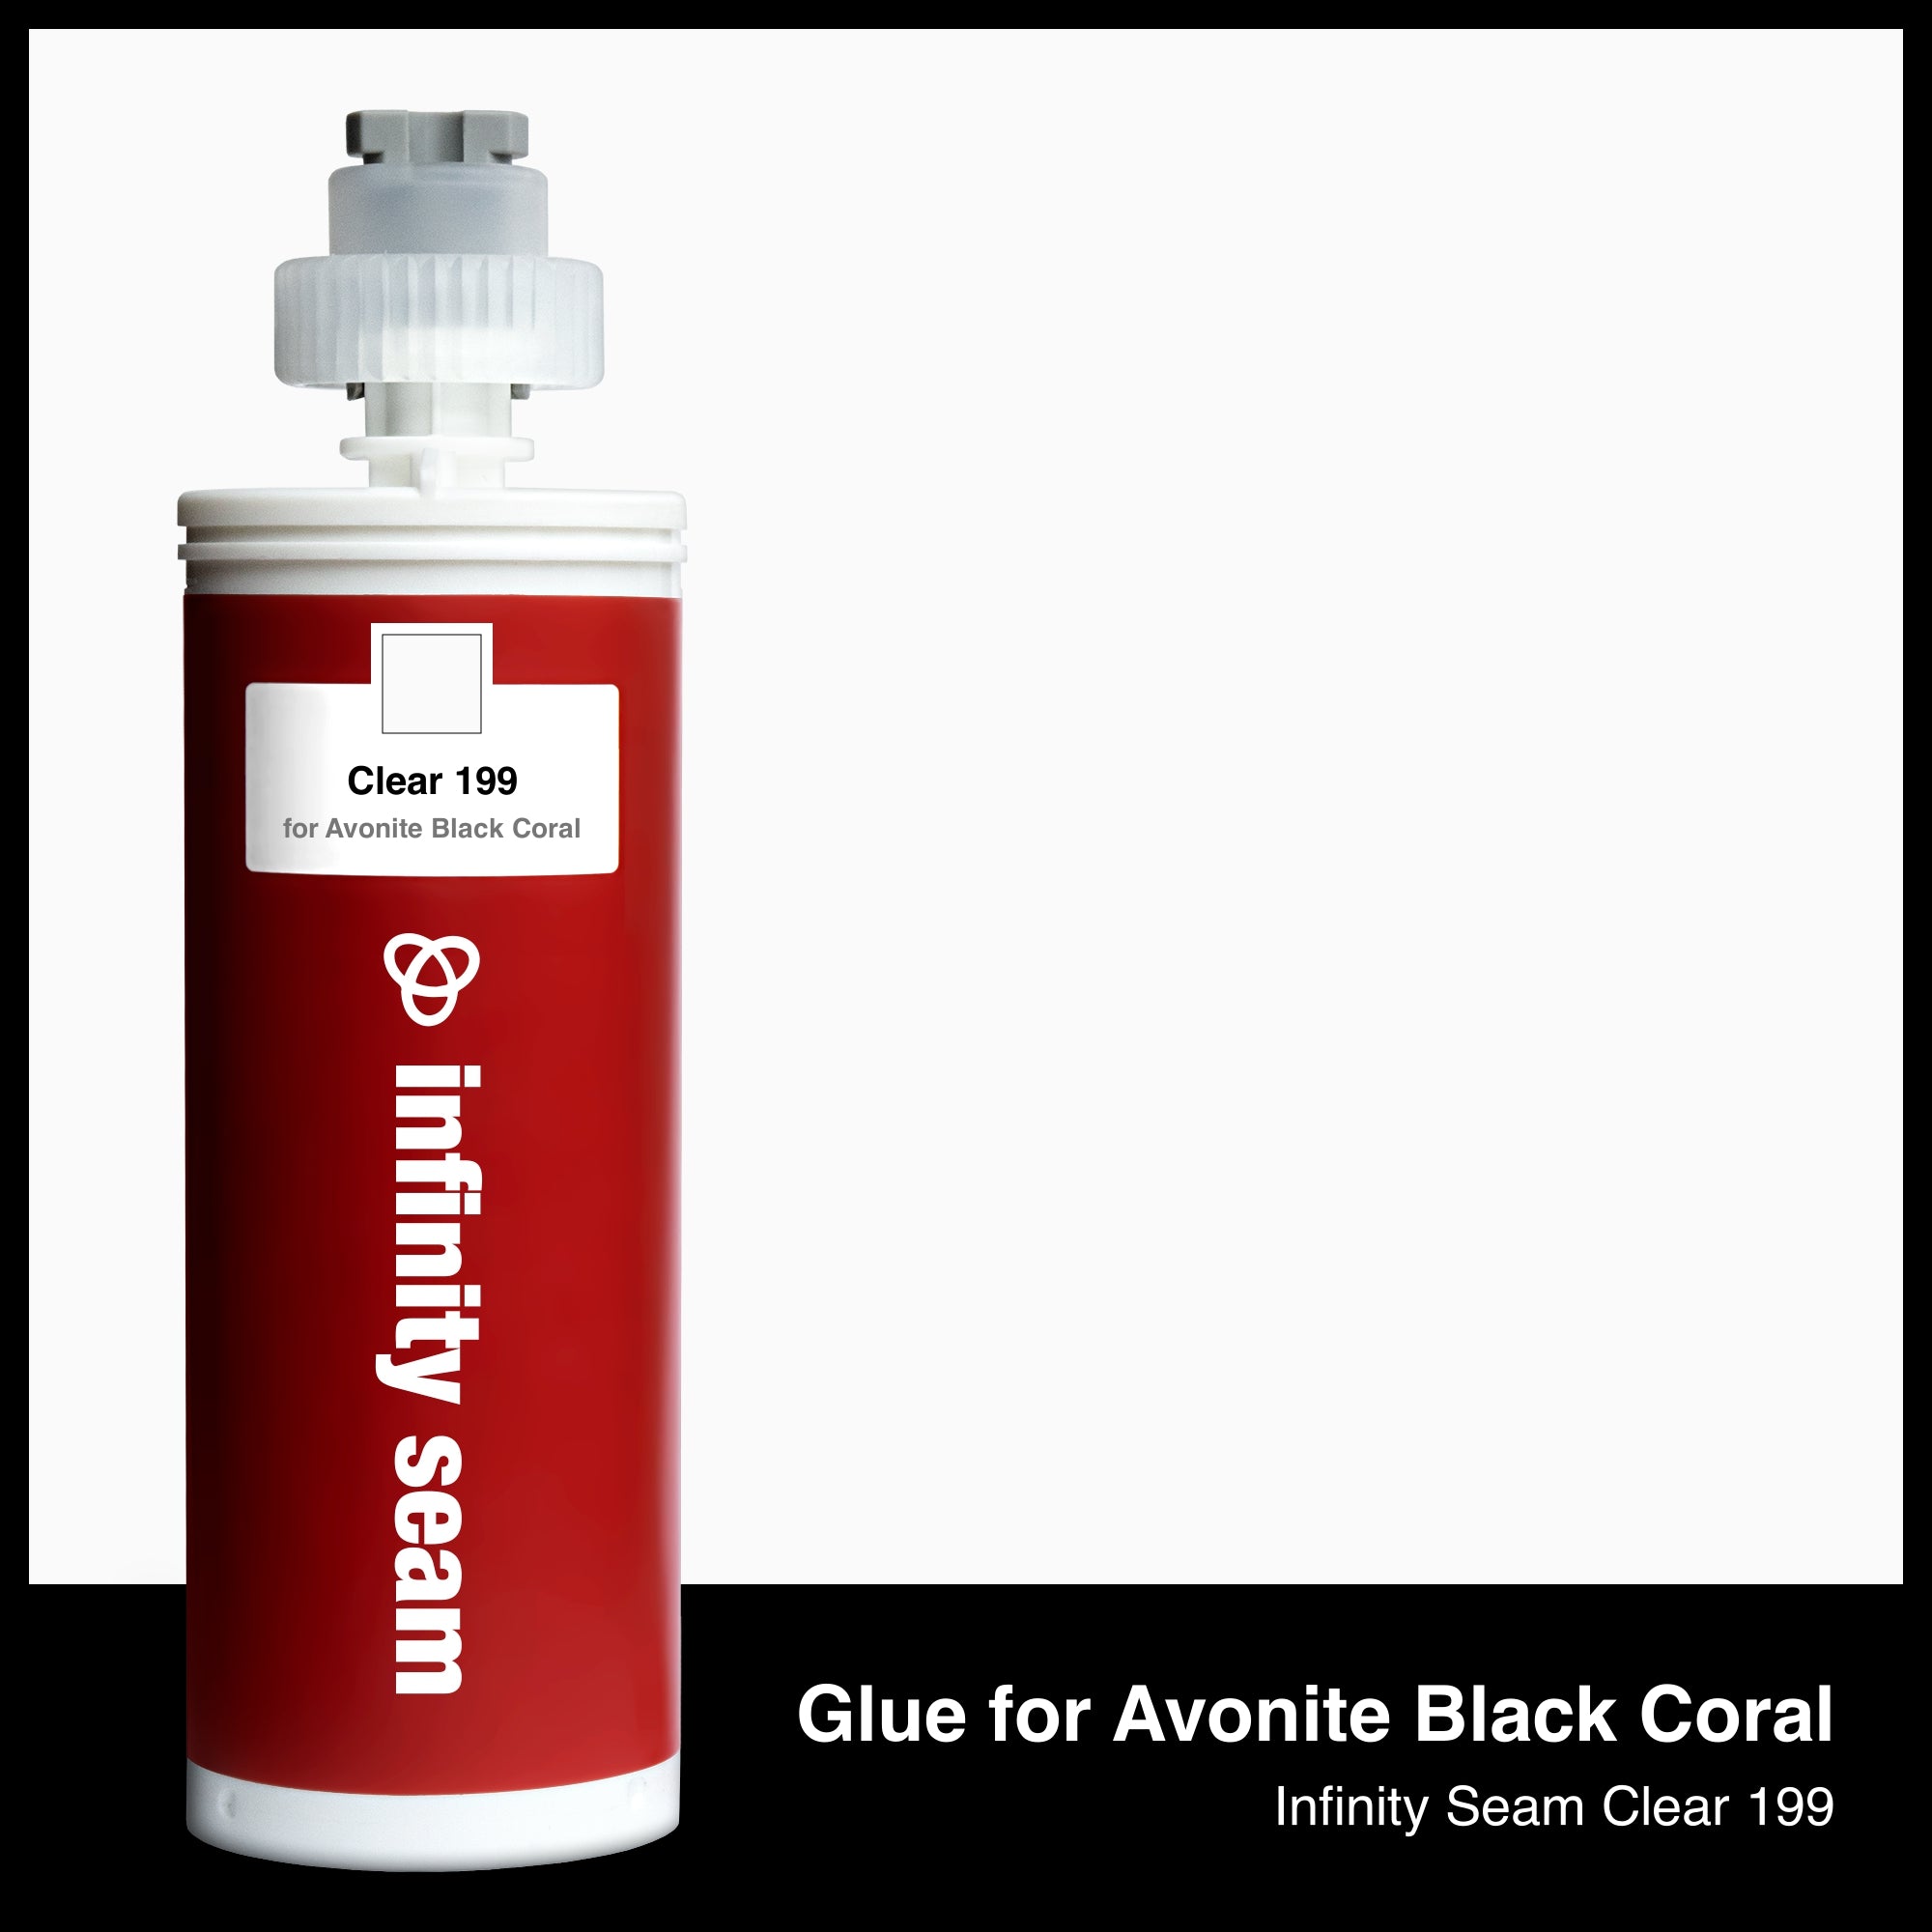 Glue for Avonite Black Coral